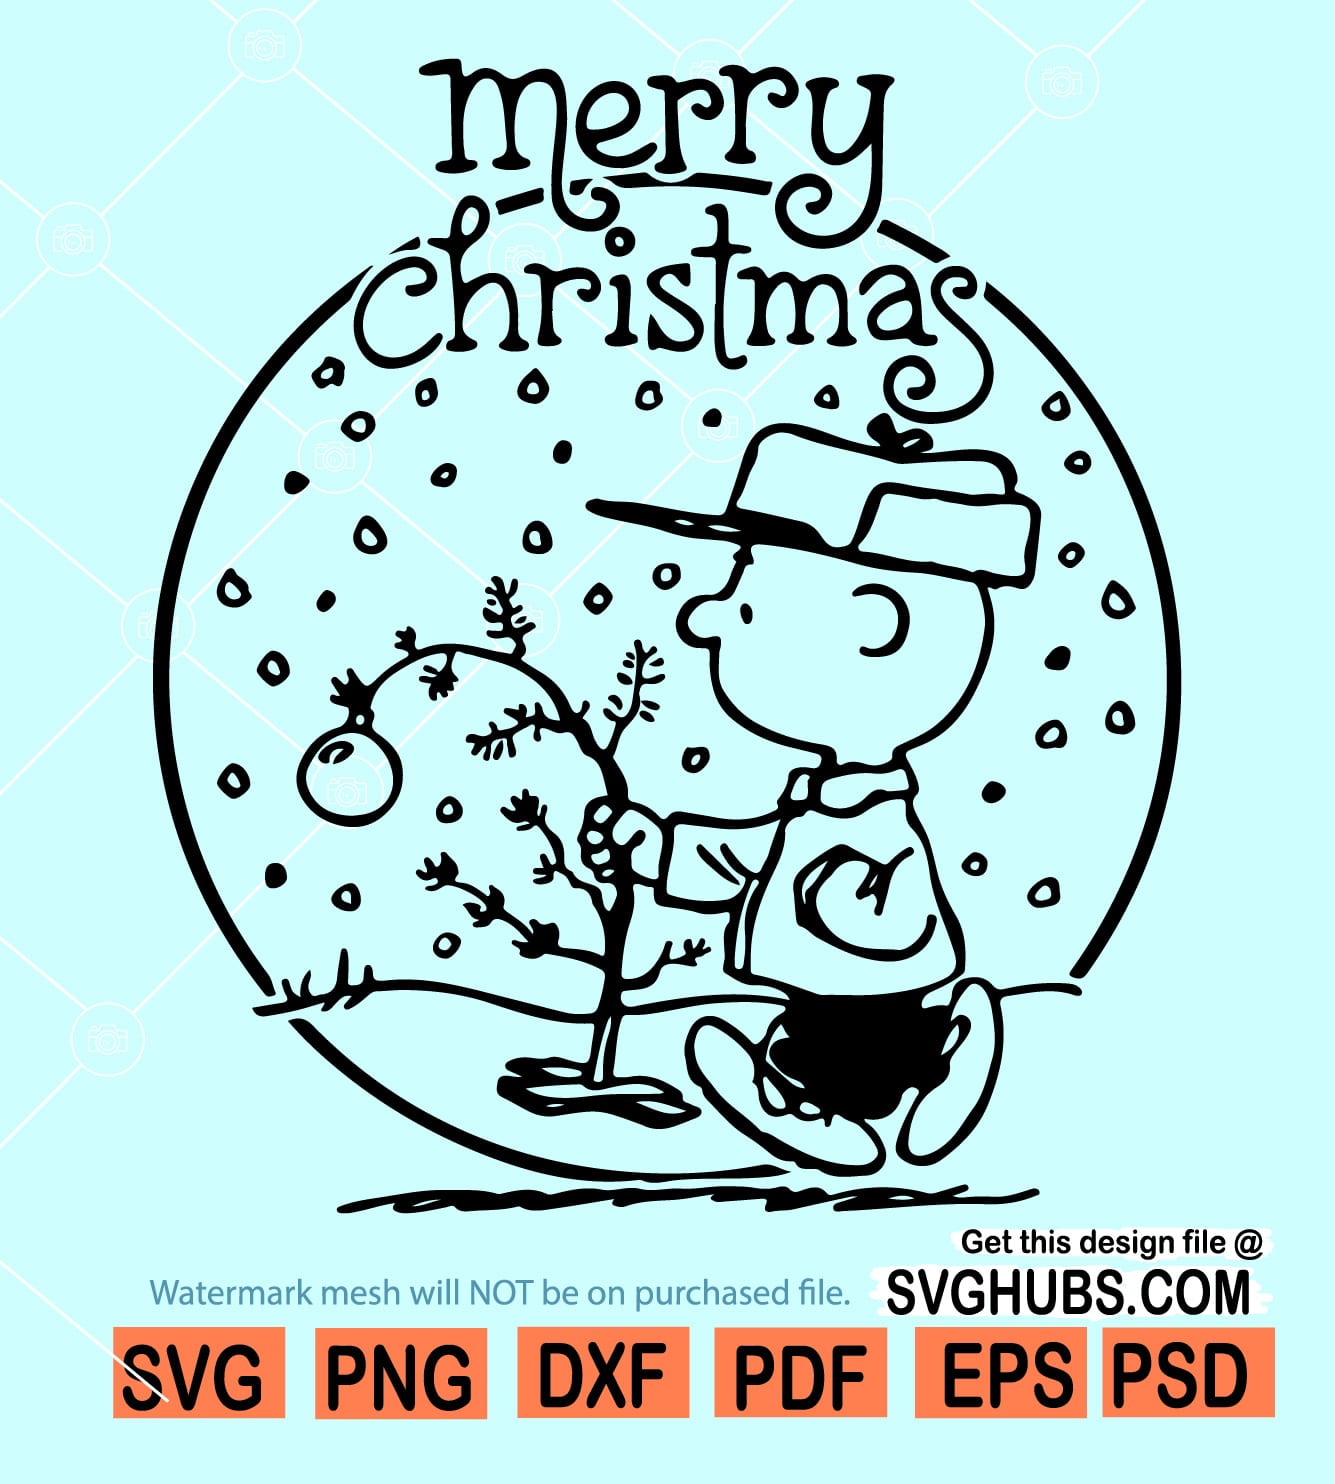 charlie-brown-christmas-svg-charlie-brown-svg-cut-file-christmas-svg-file